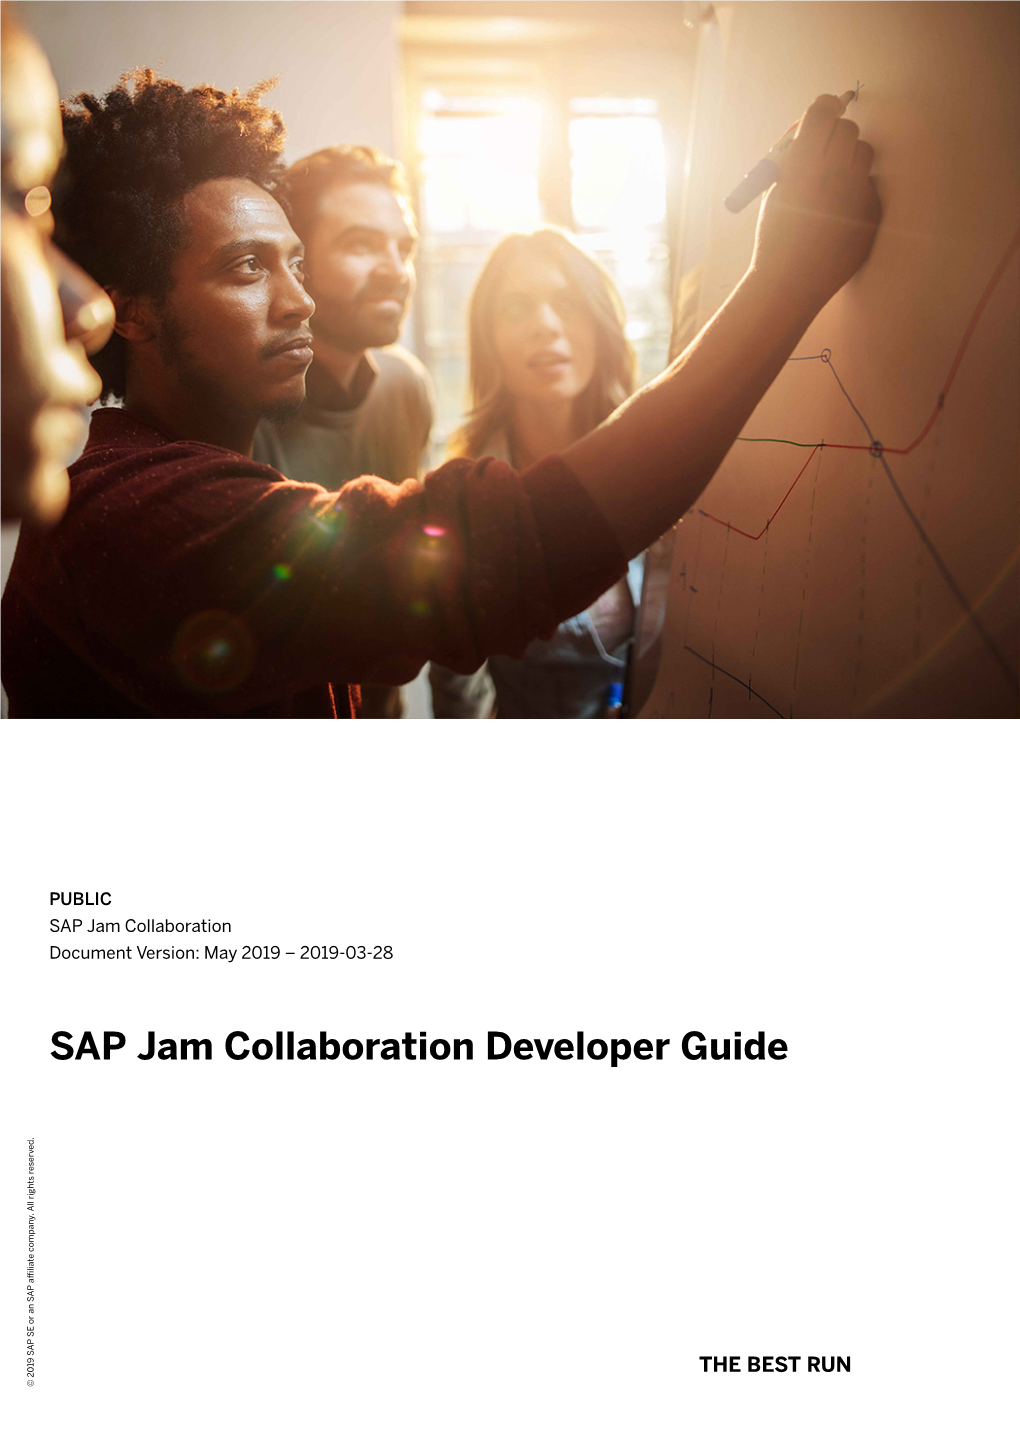 SAP Jam Collaboration Developer Guide Company